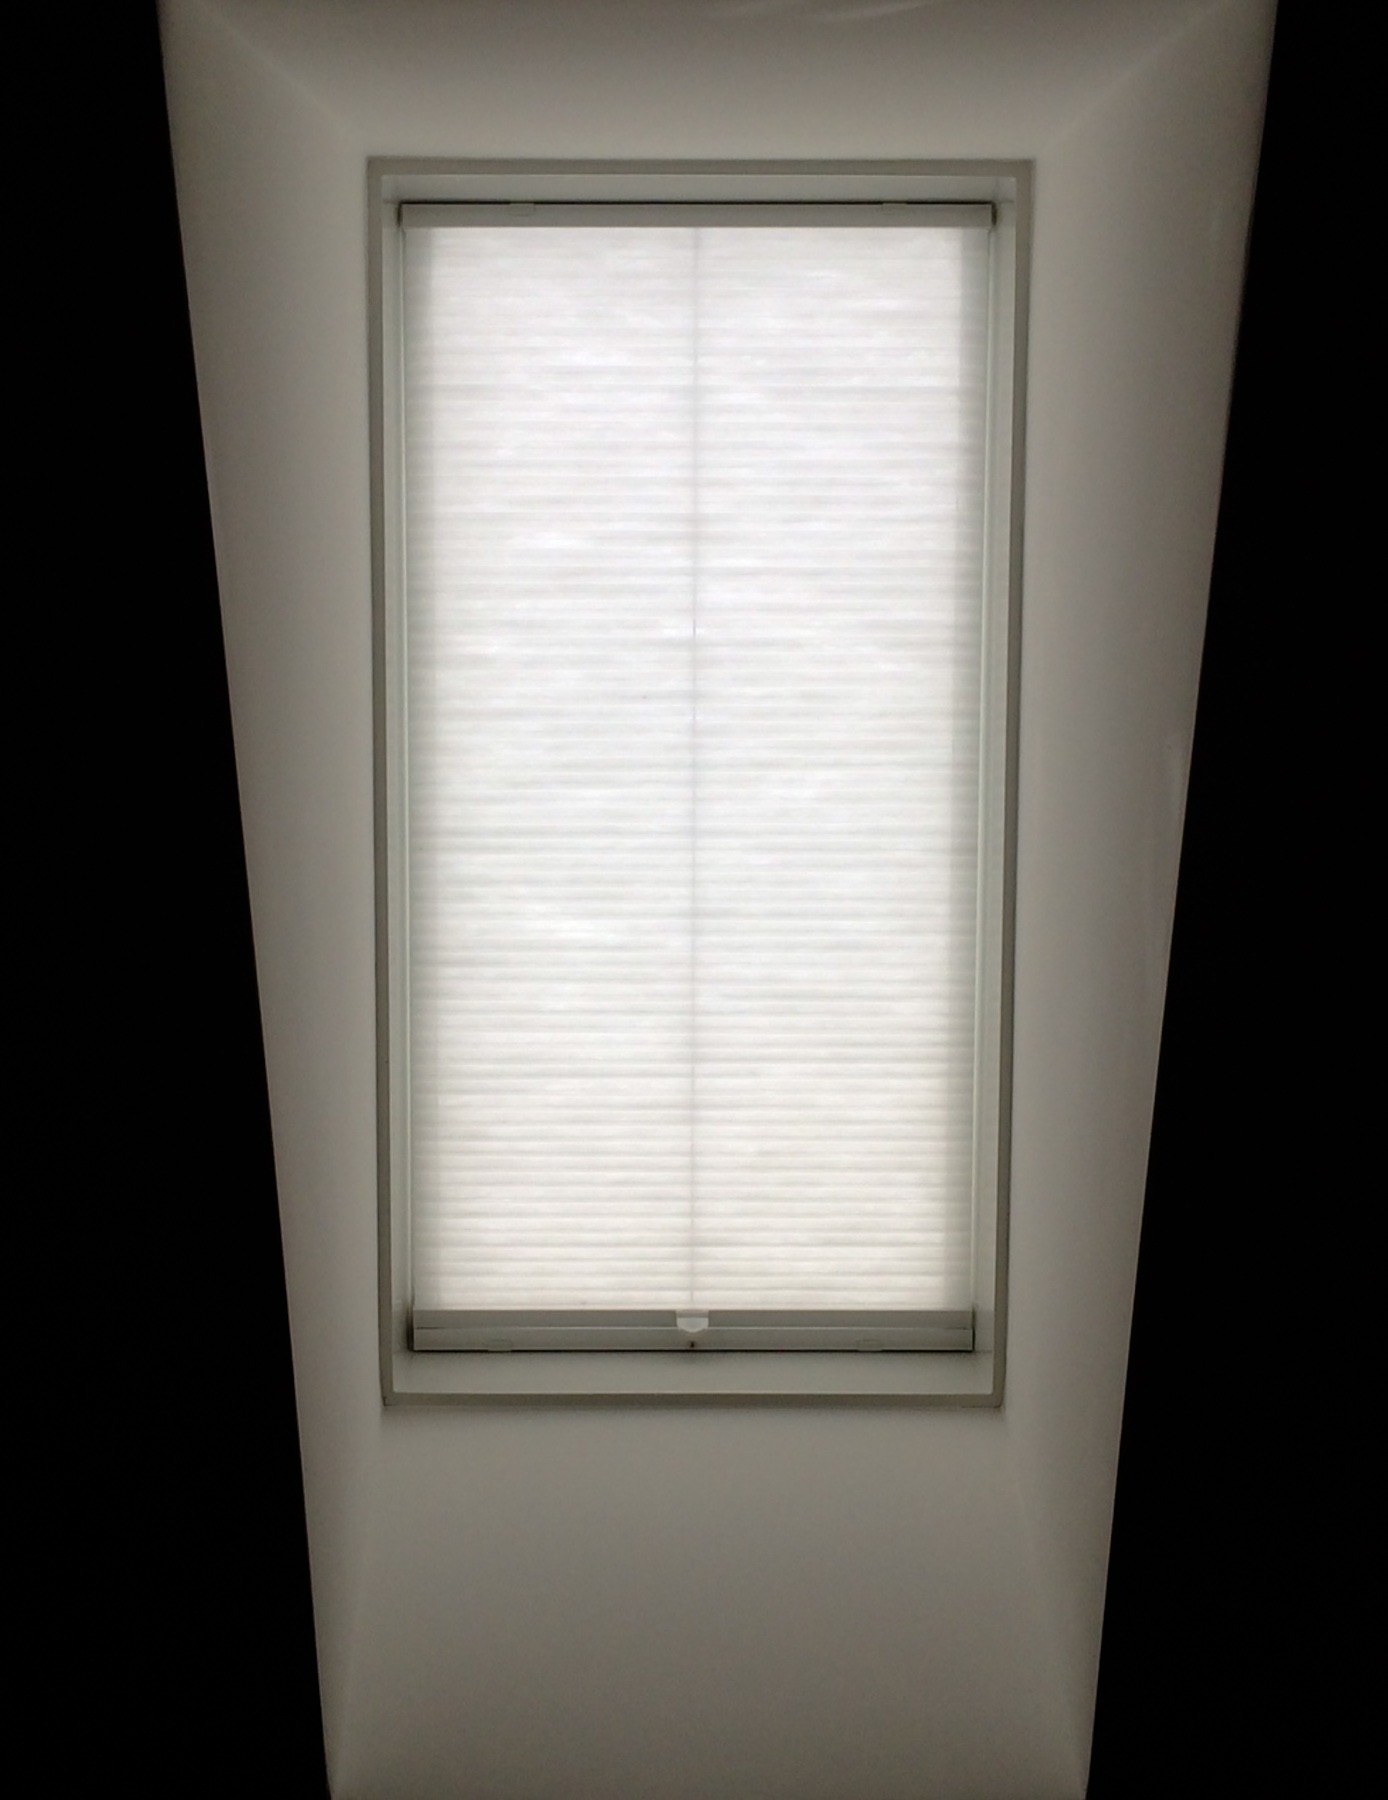 Honeycomb skylight blinds